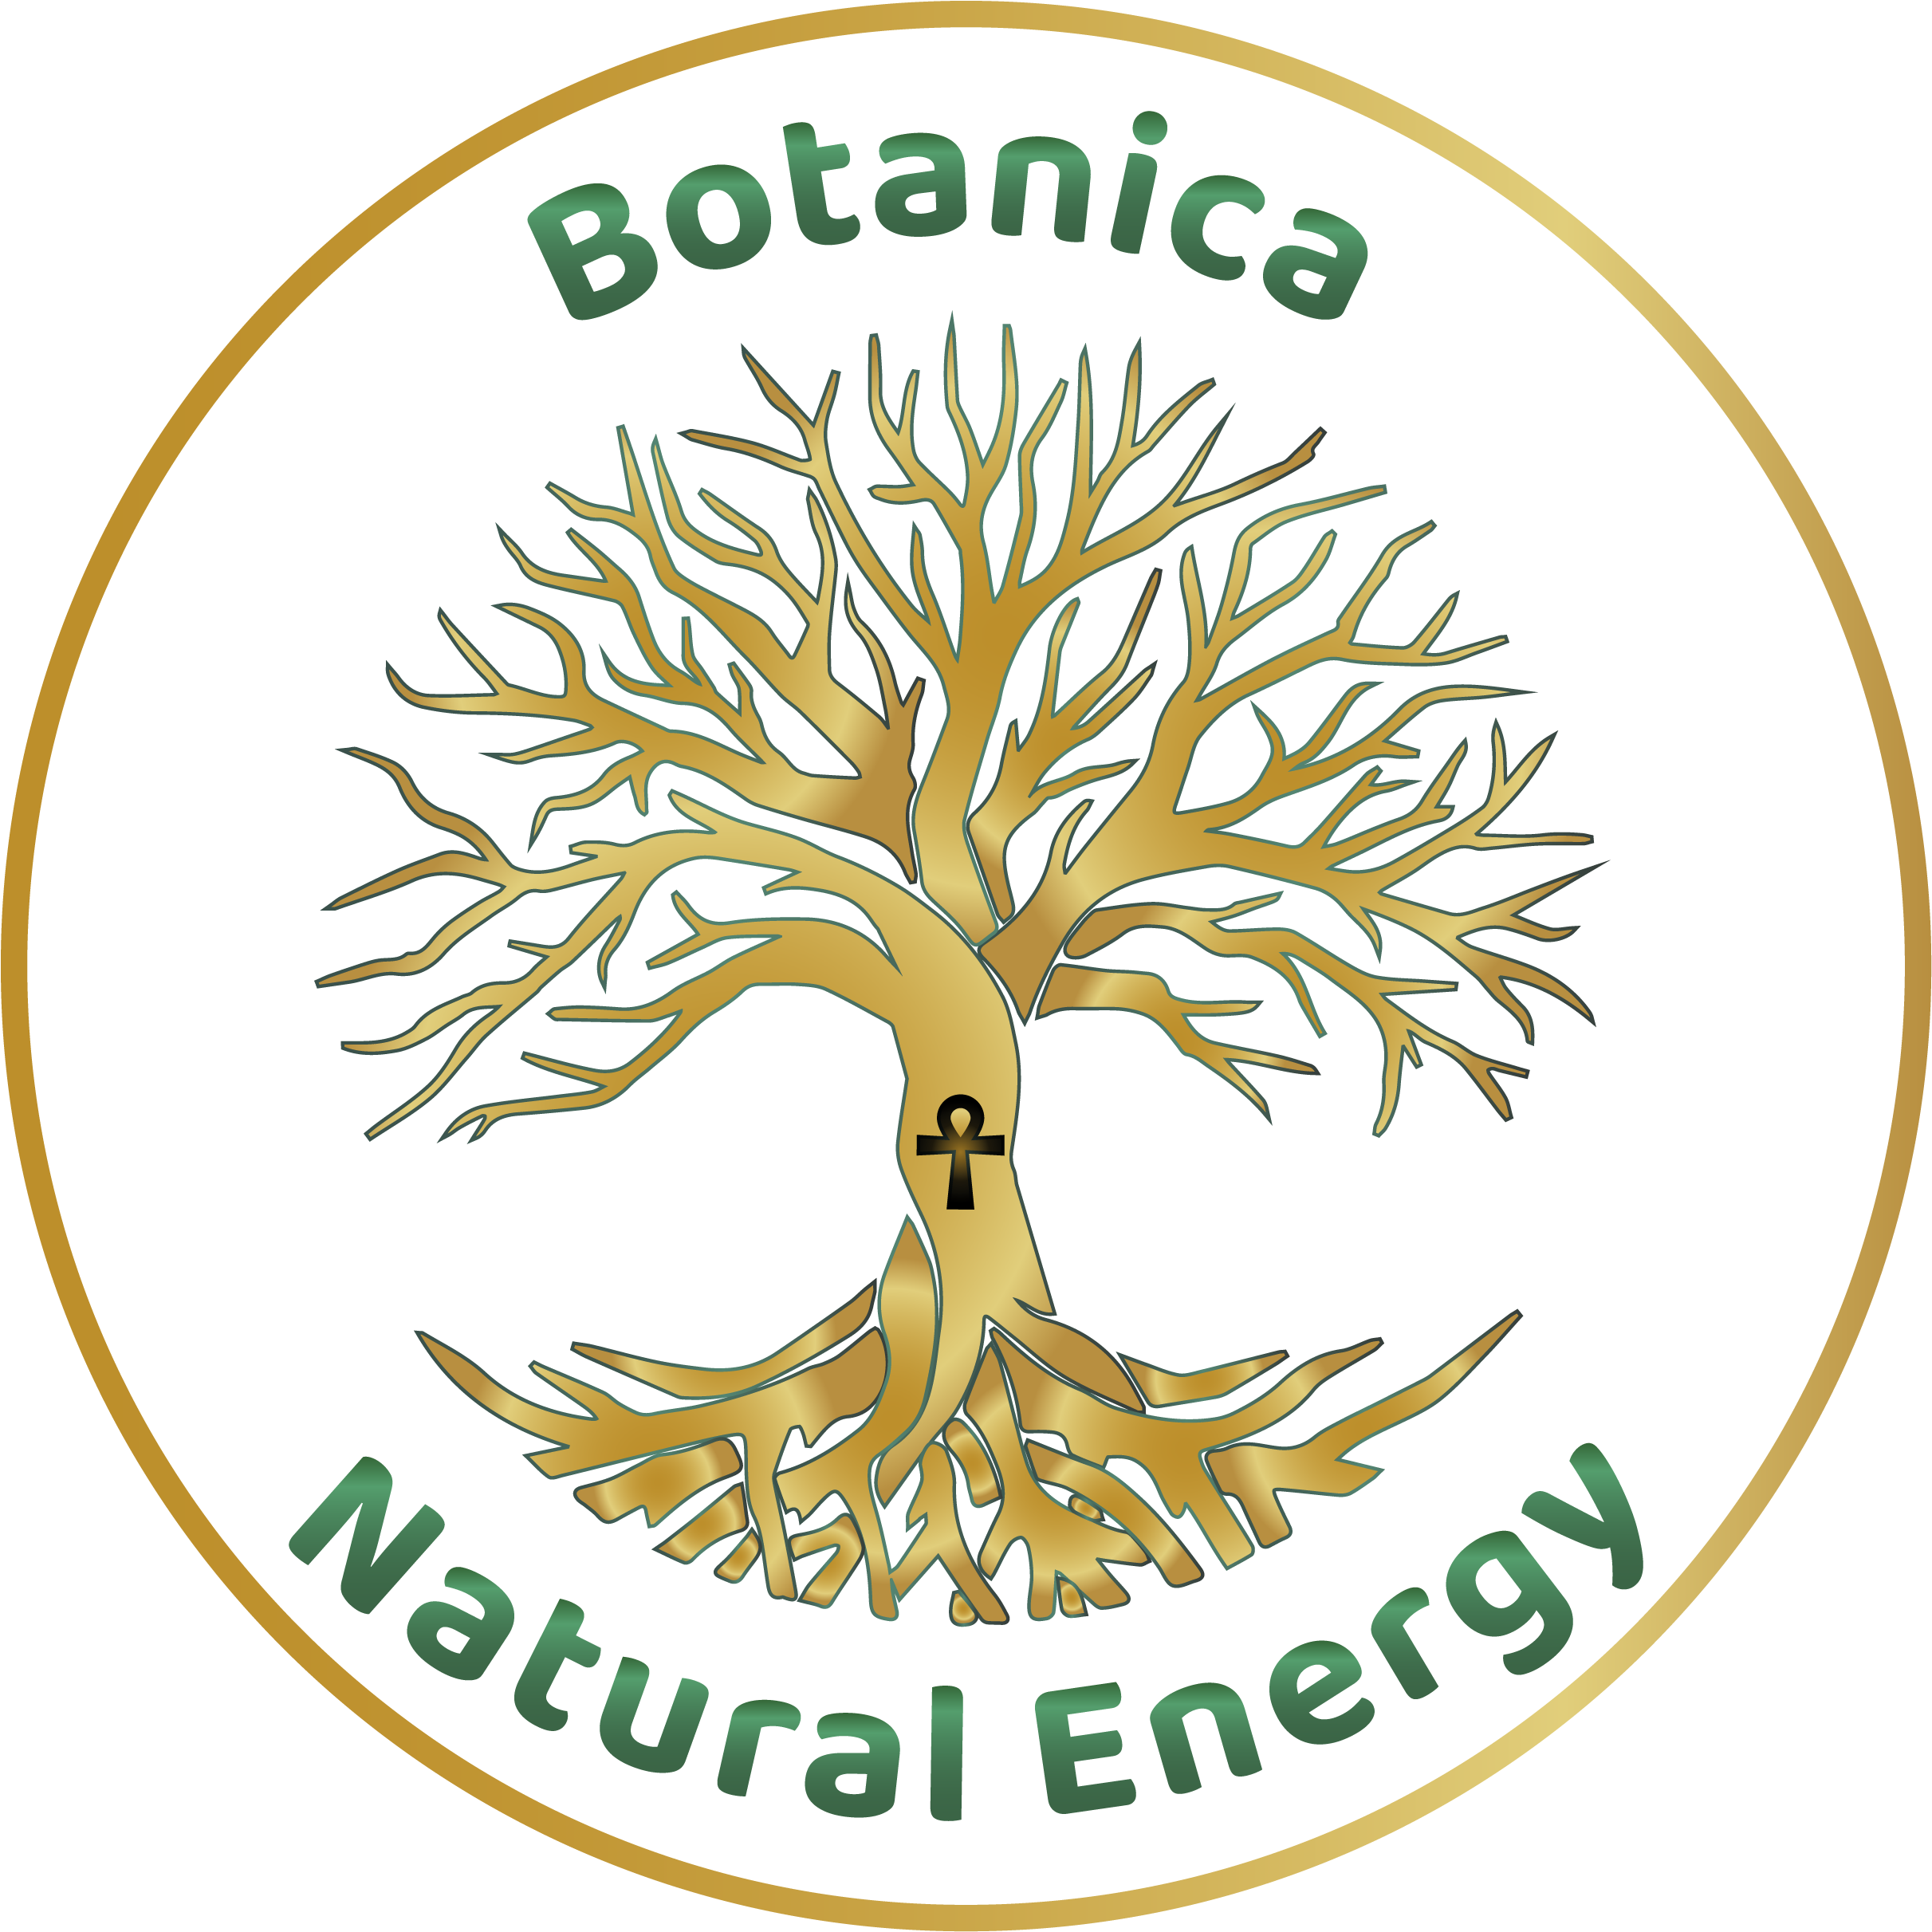 Botanica Natural Energy DEF